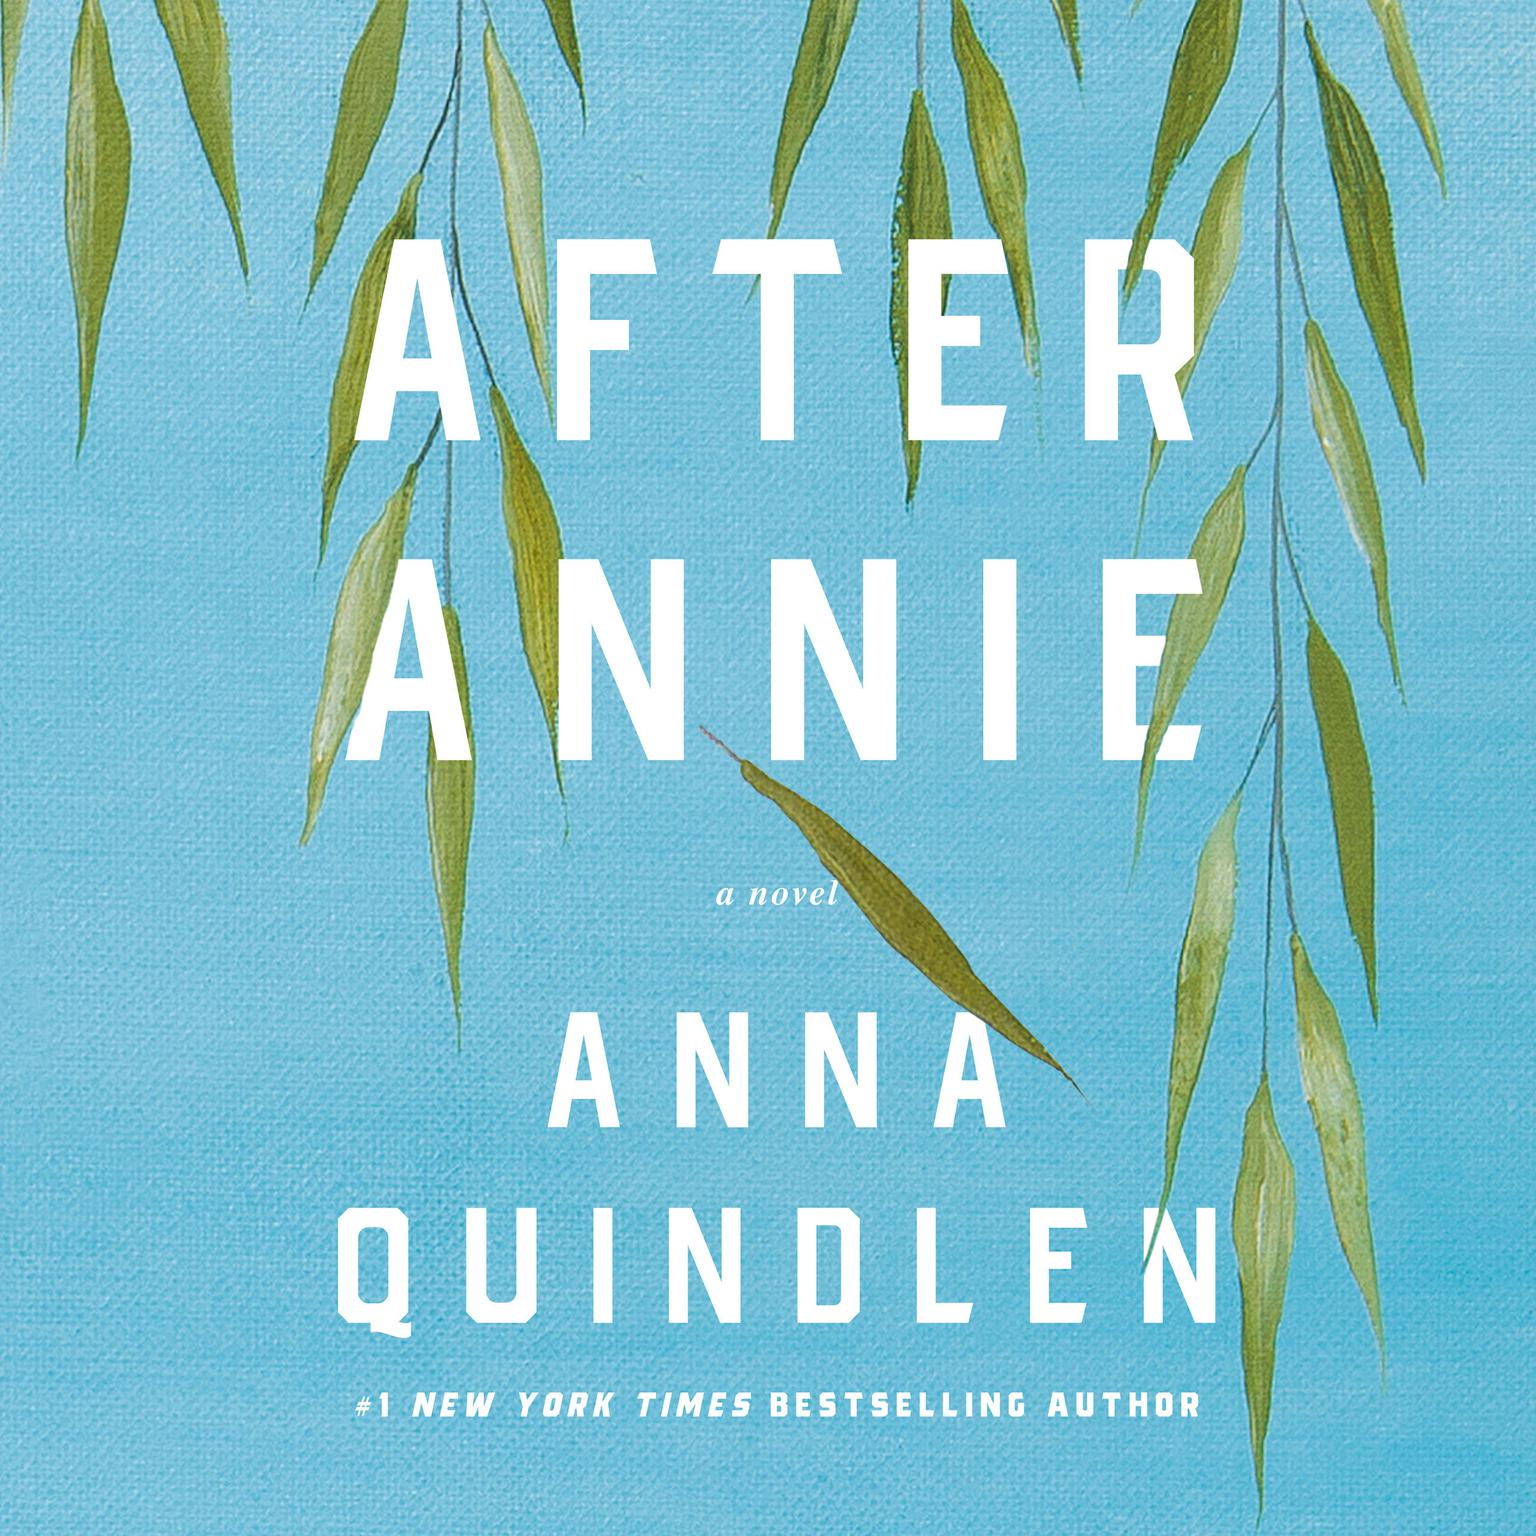 After Annie: A Novel Audiobook, by Anna Quindlen